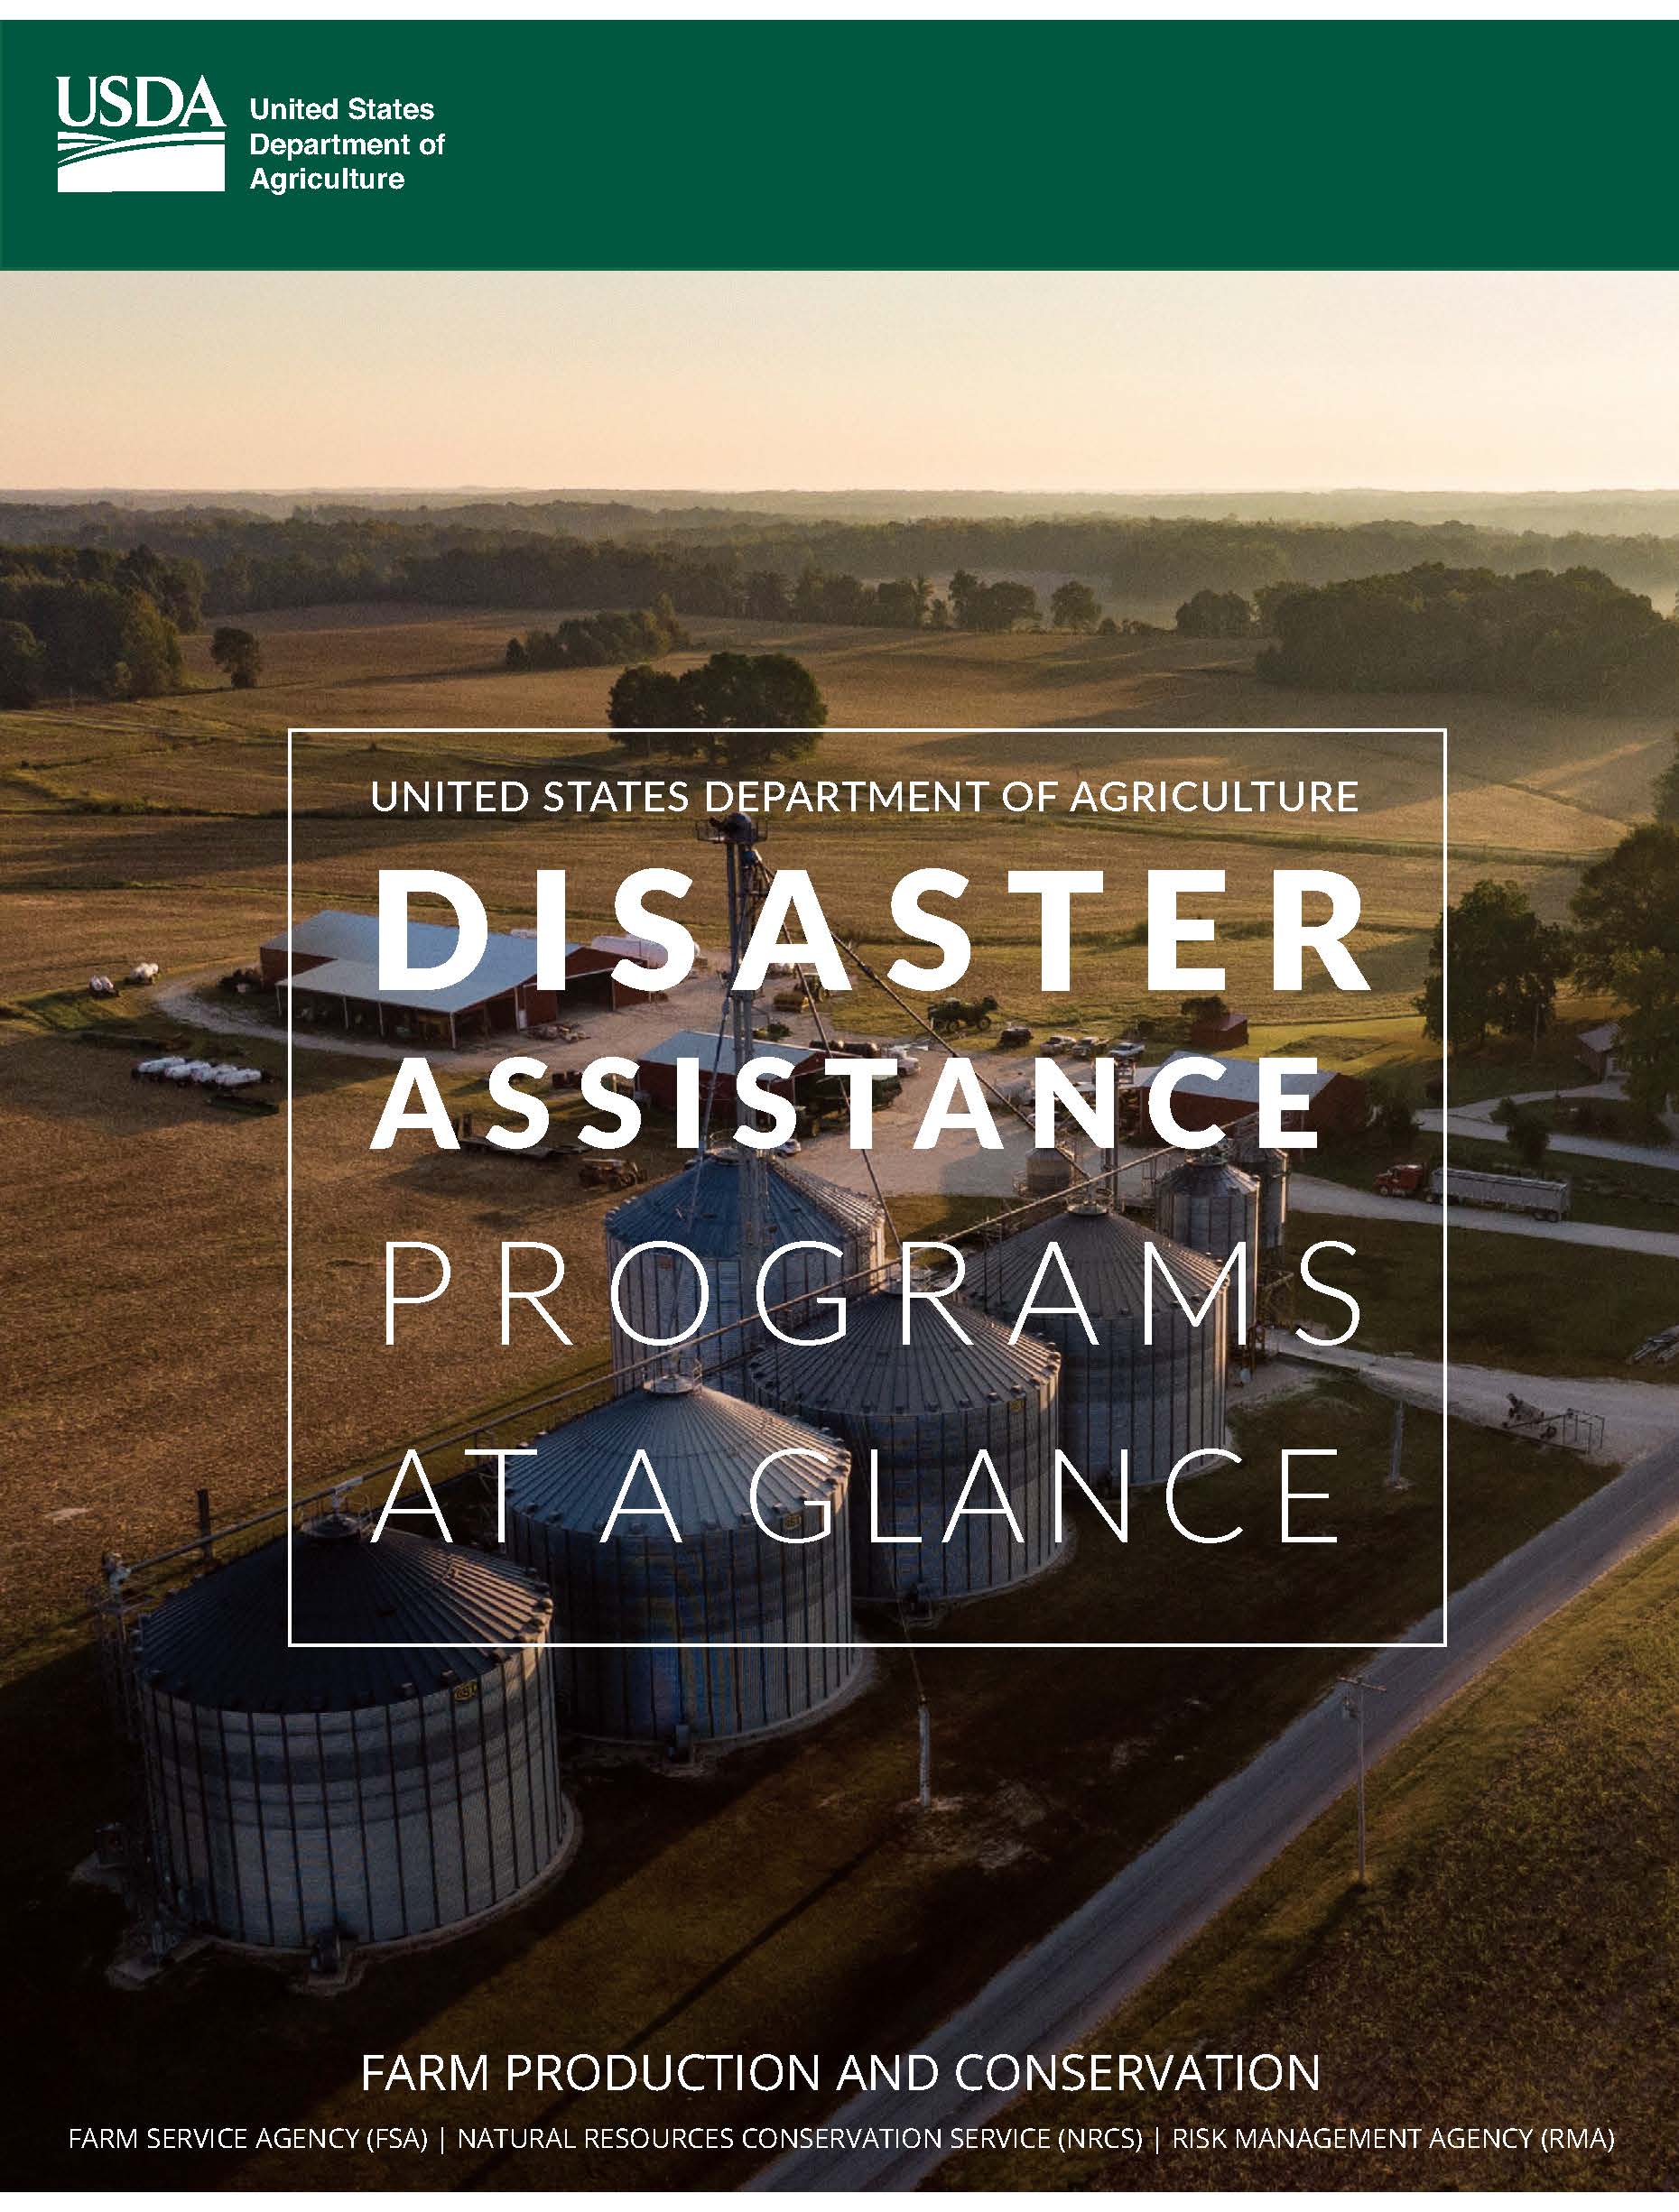 USDA Disaster Assistance at a Glance brochure